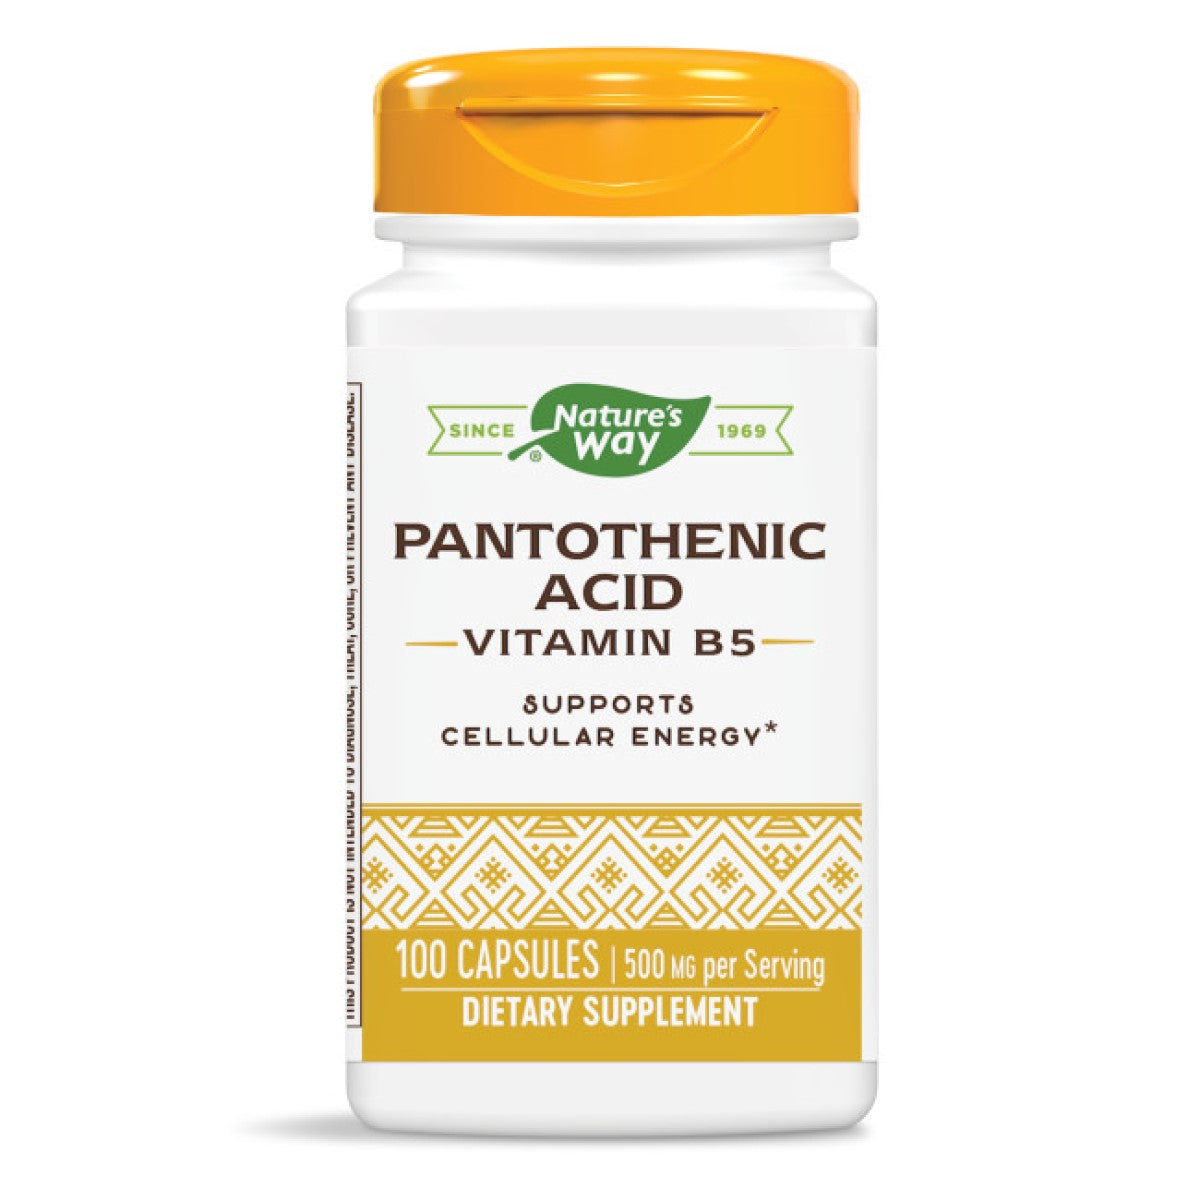 Primary image of Pantothenic Acid